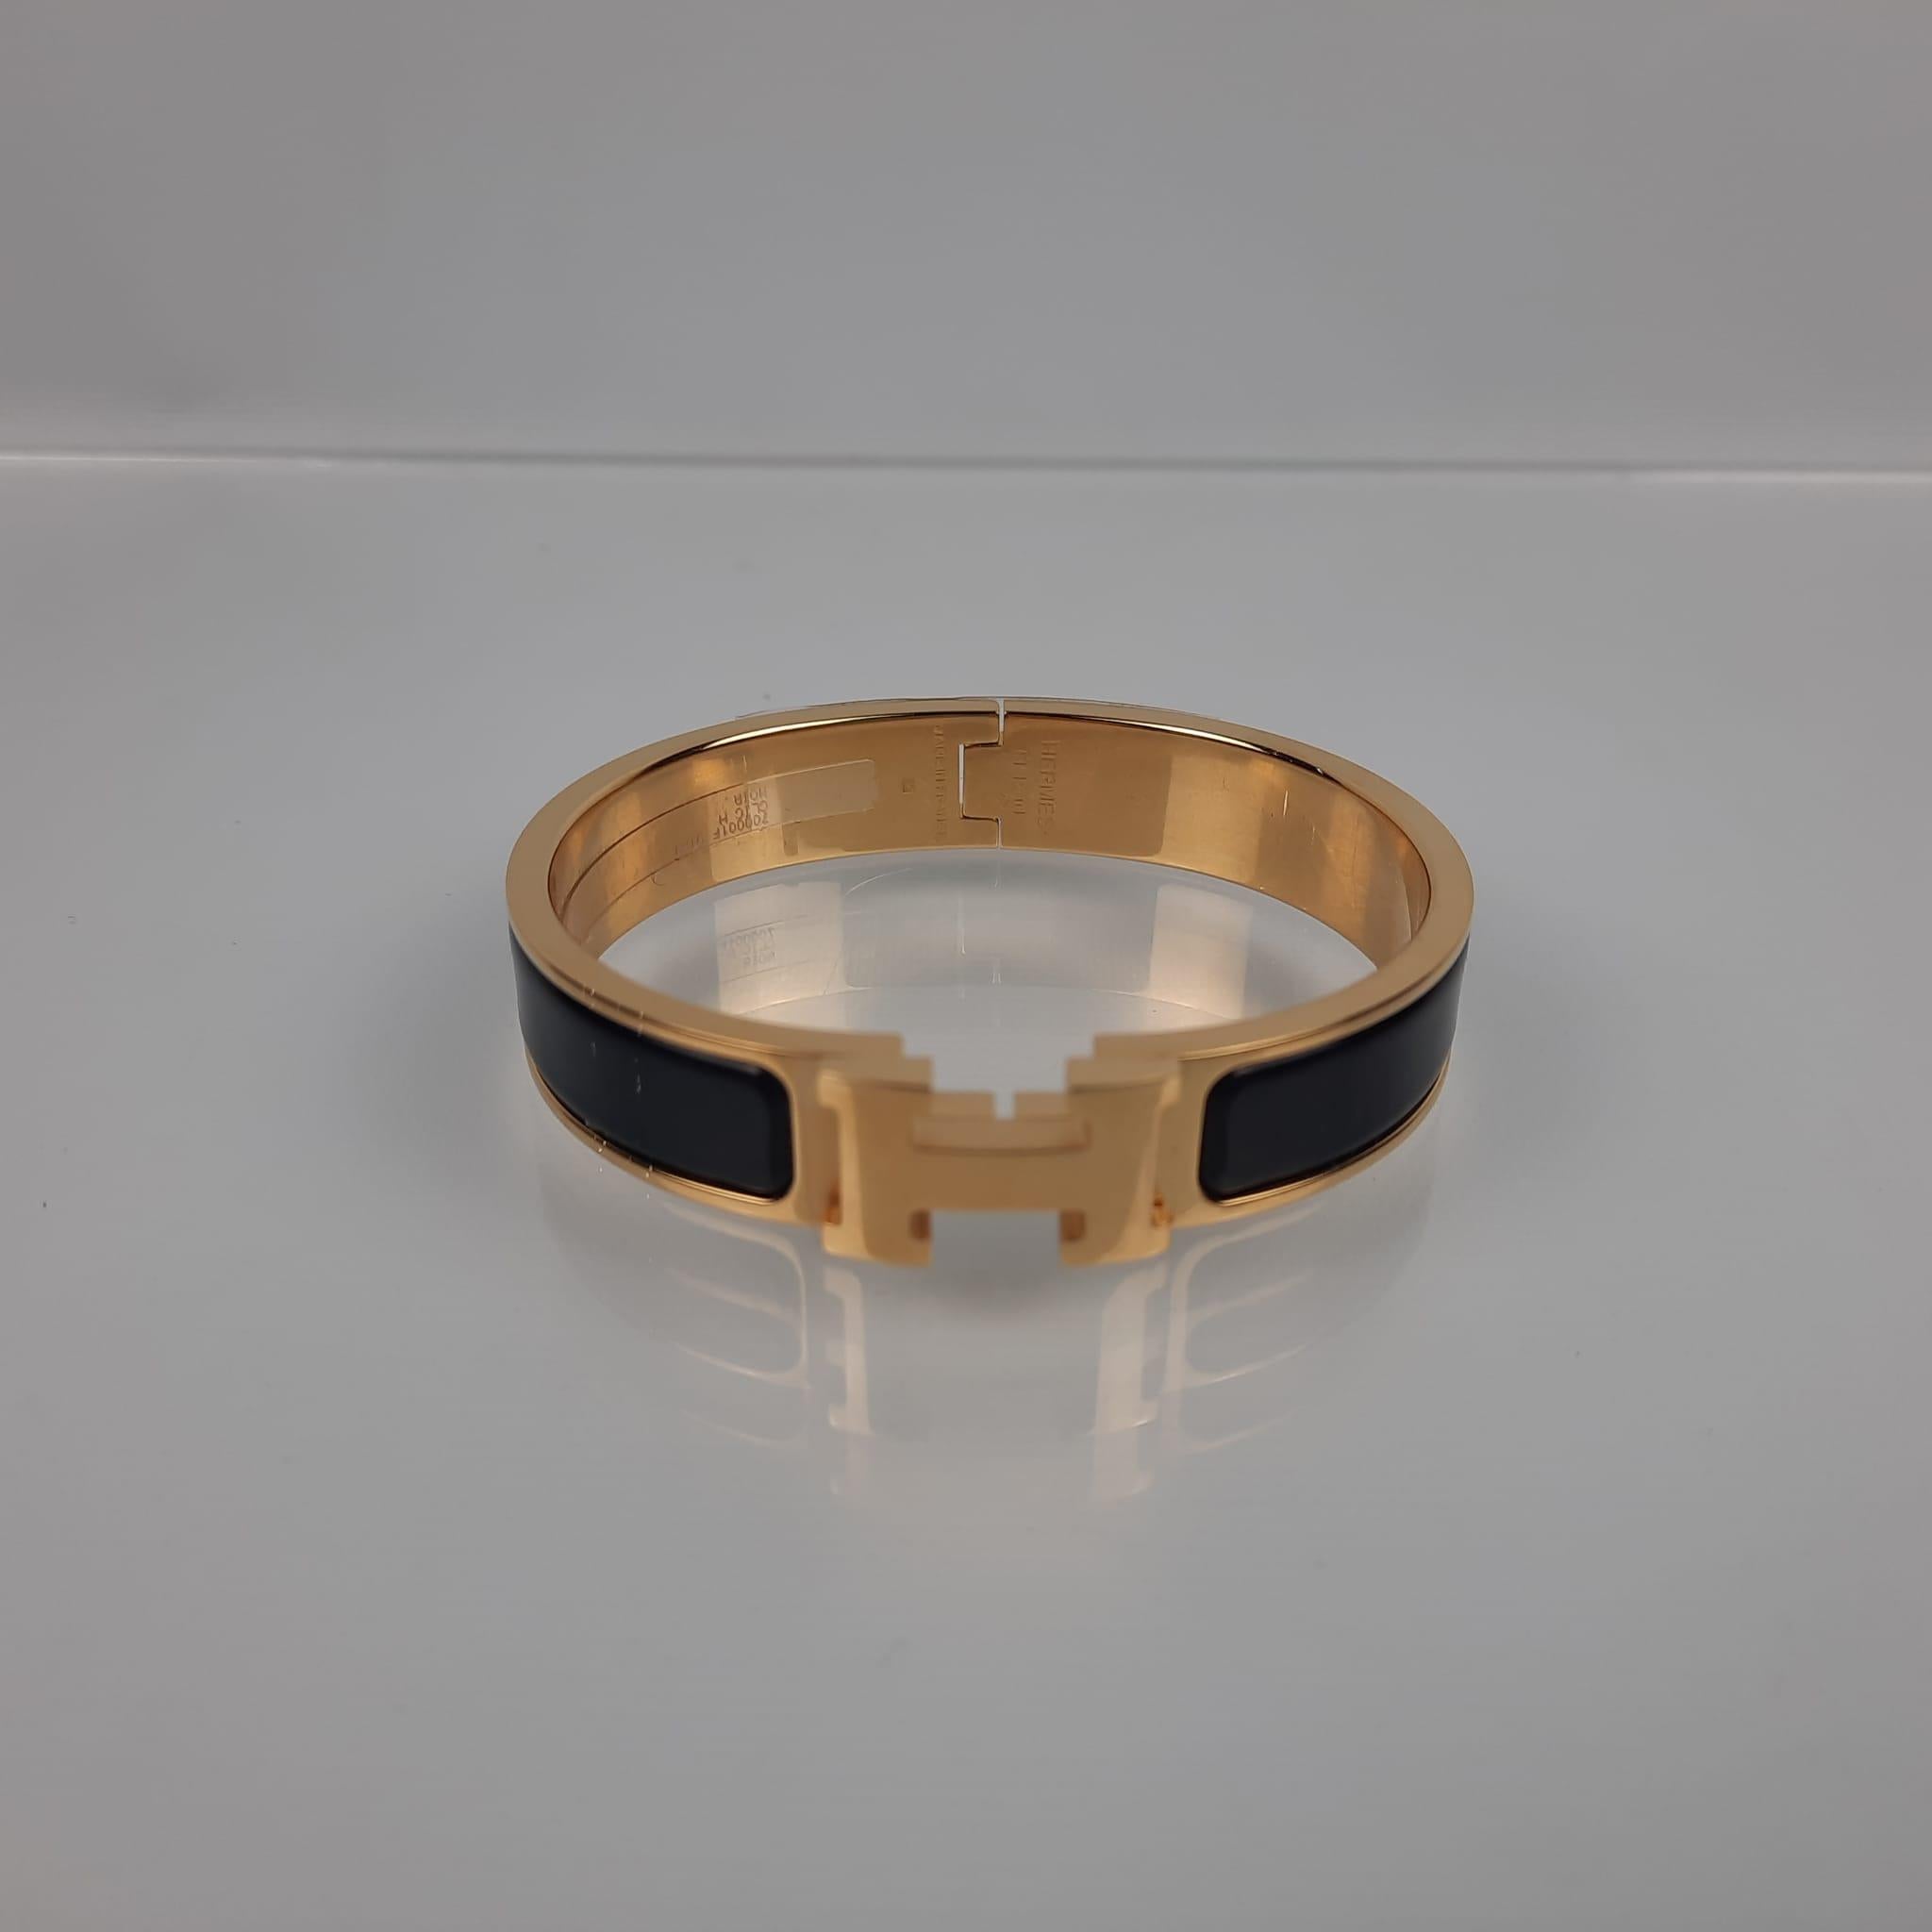 Size GM
Narrow bracelet in enamel with gold-plated hardware.
Wrist size: 18 cm  Width: 12 mm